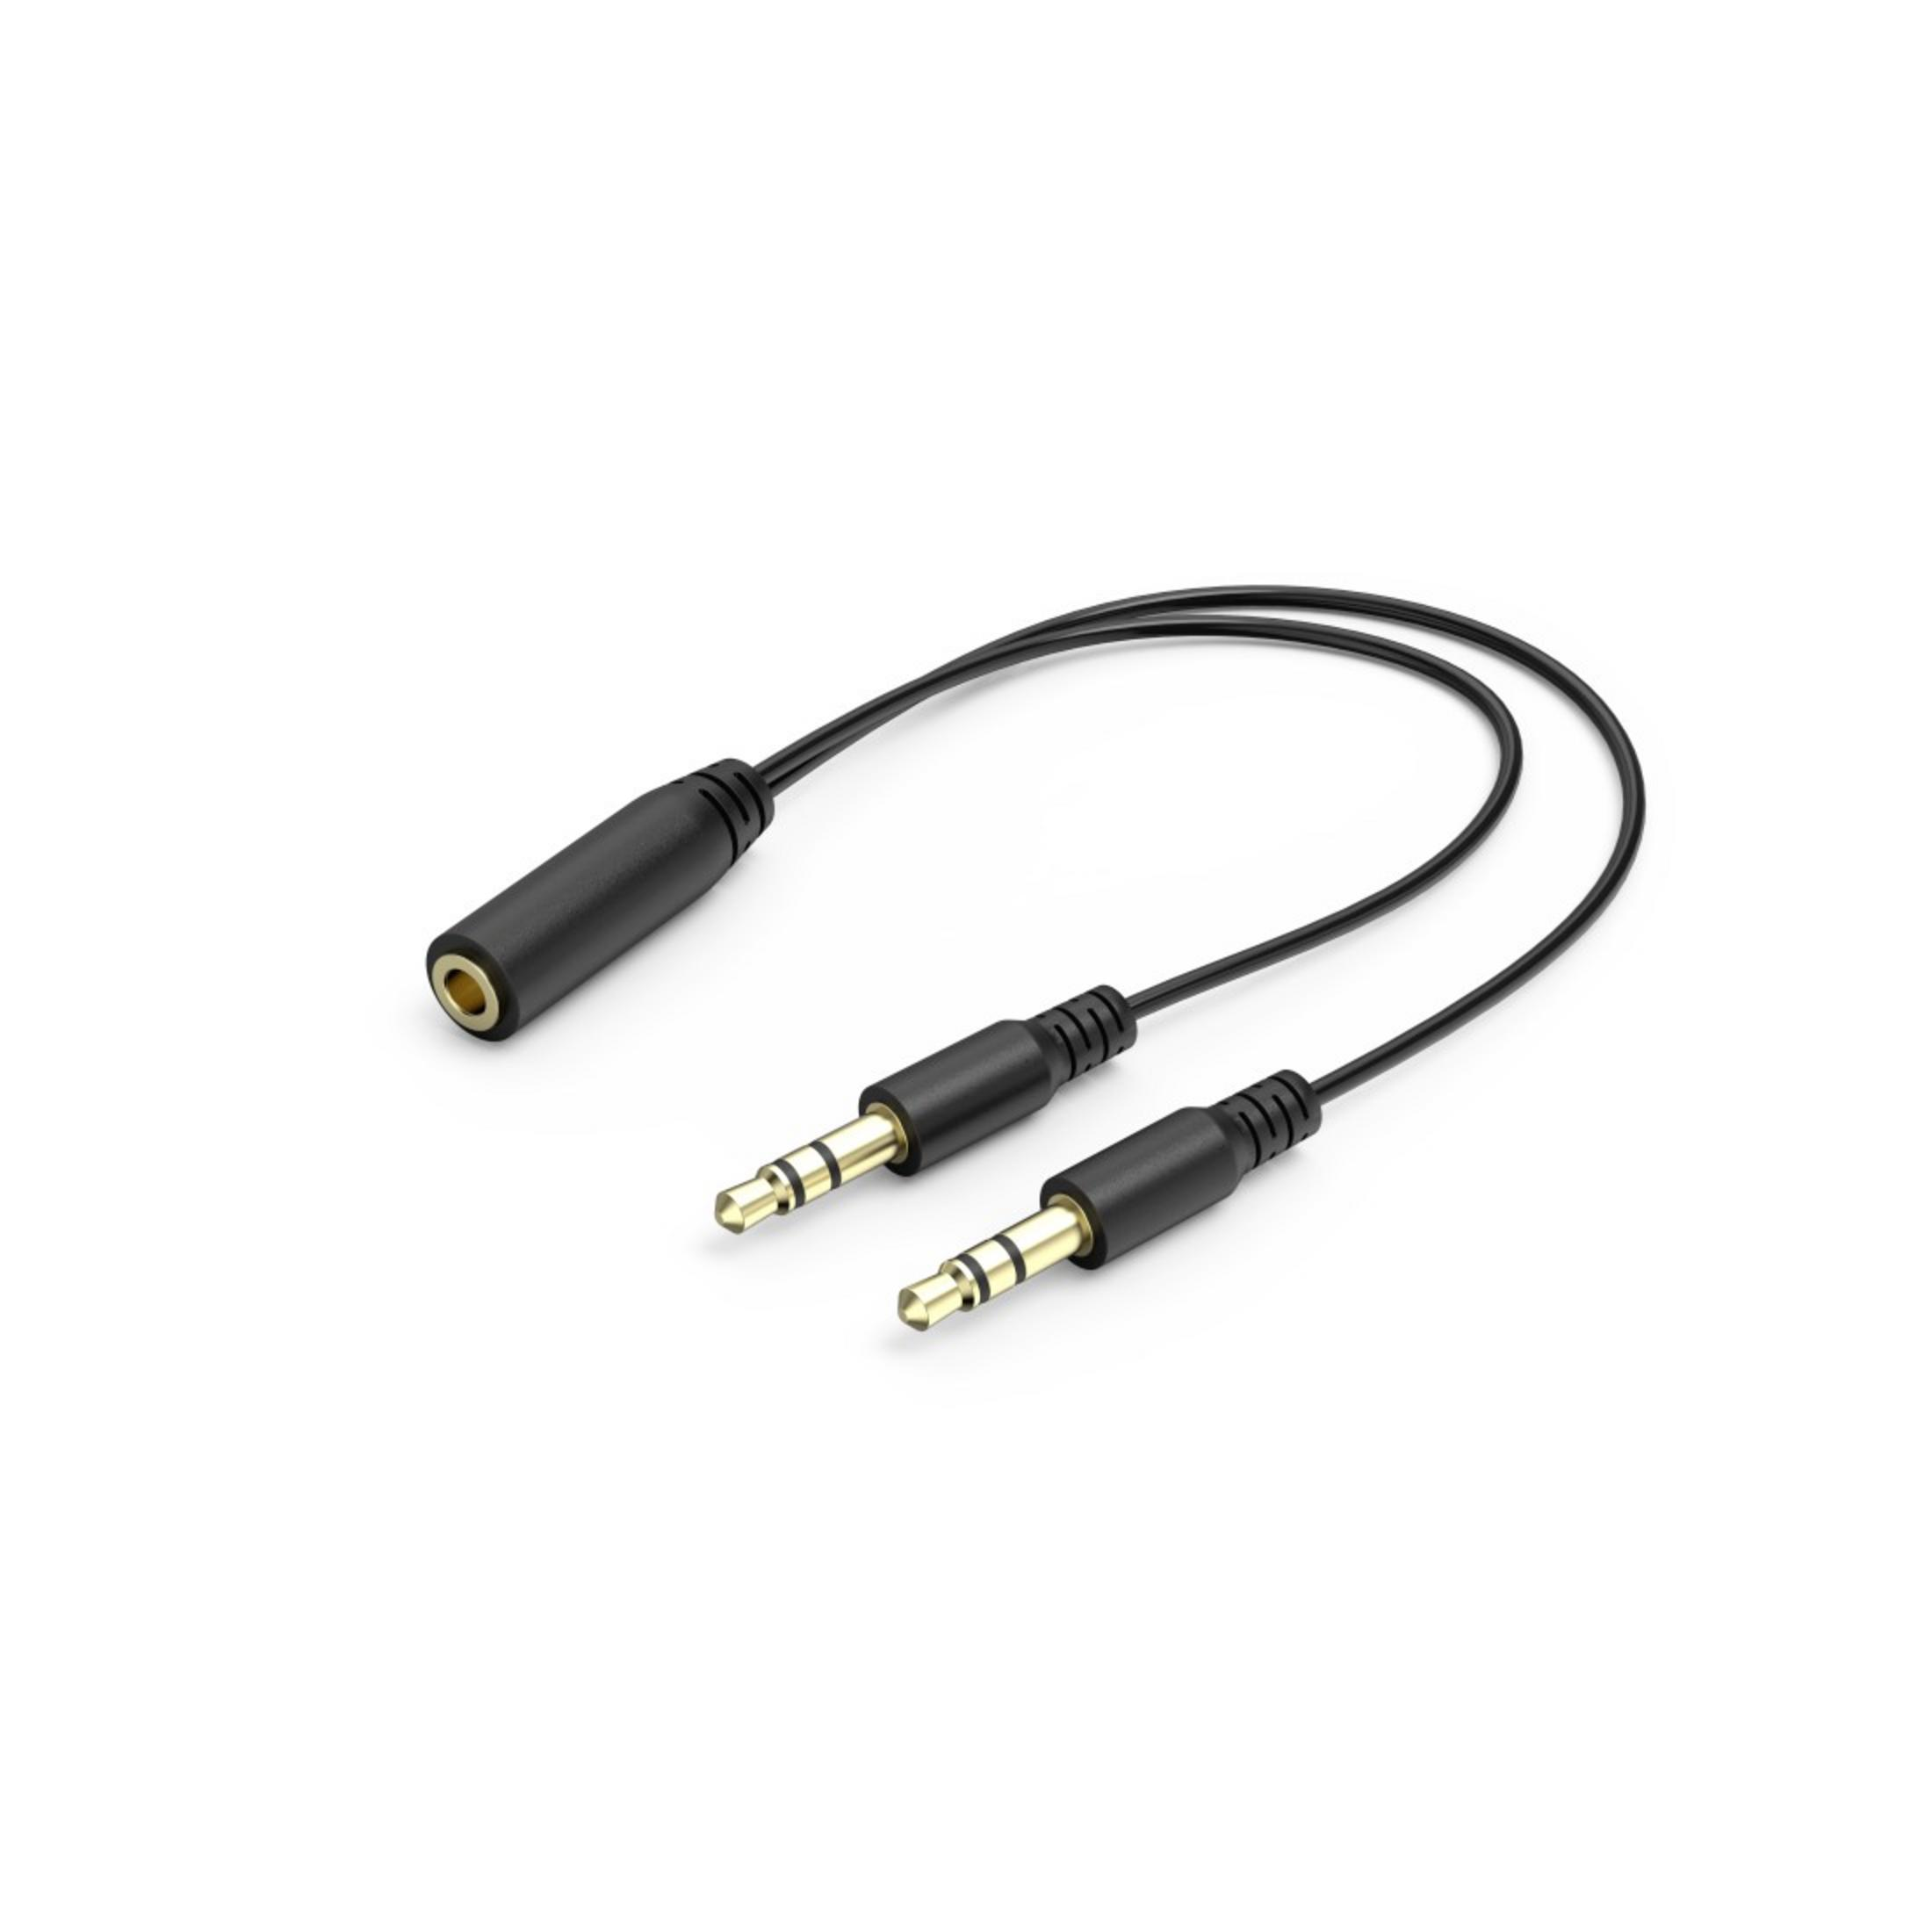 URAGE SoundZ 300, Over-ear Headset Schwarz